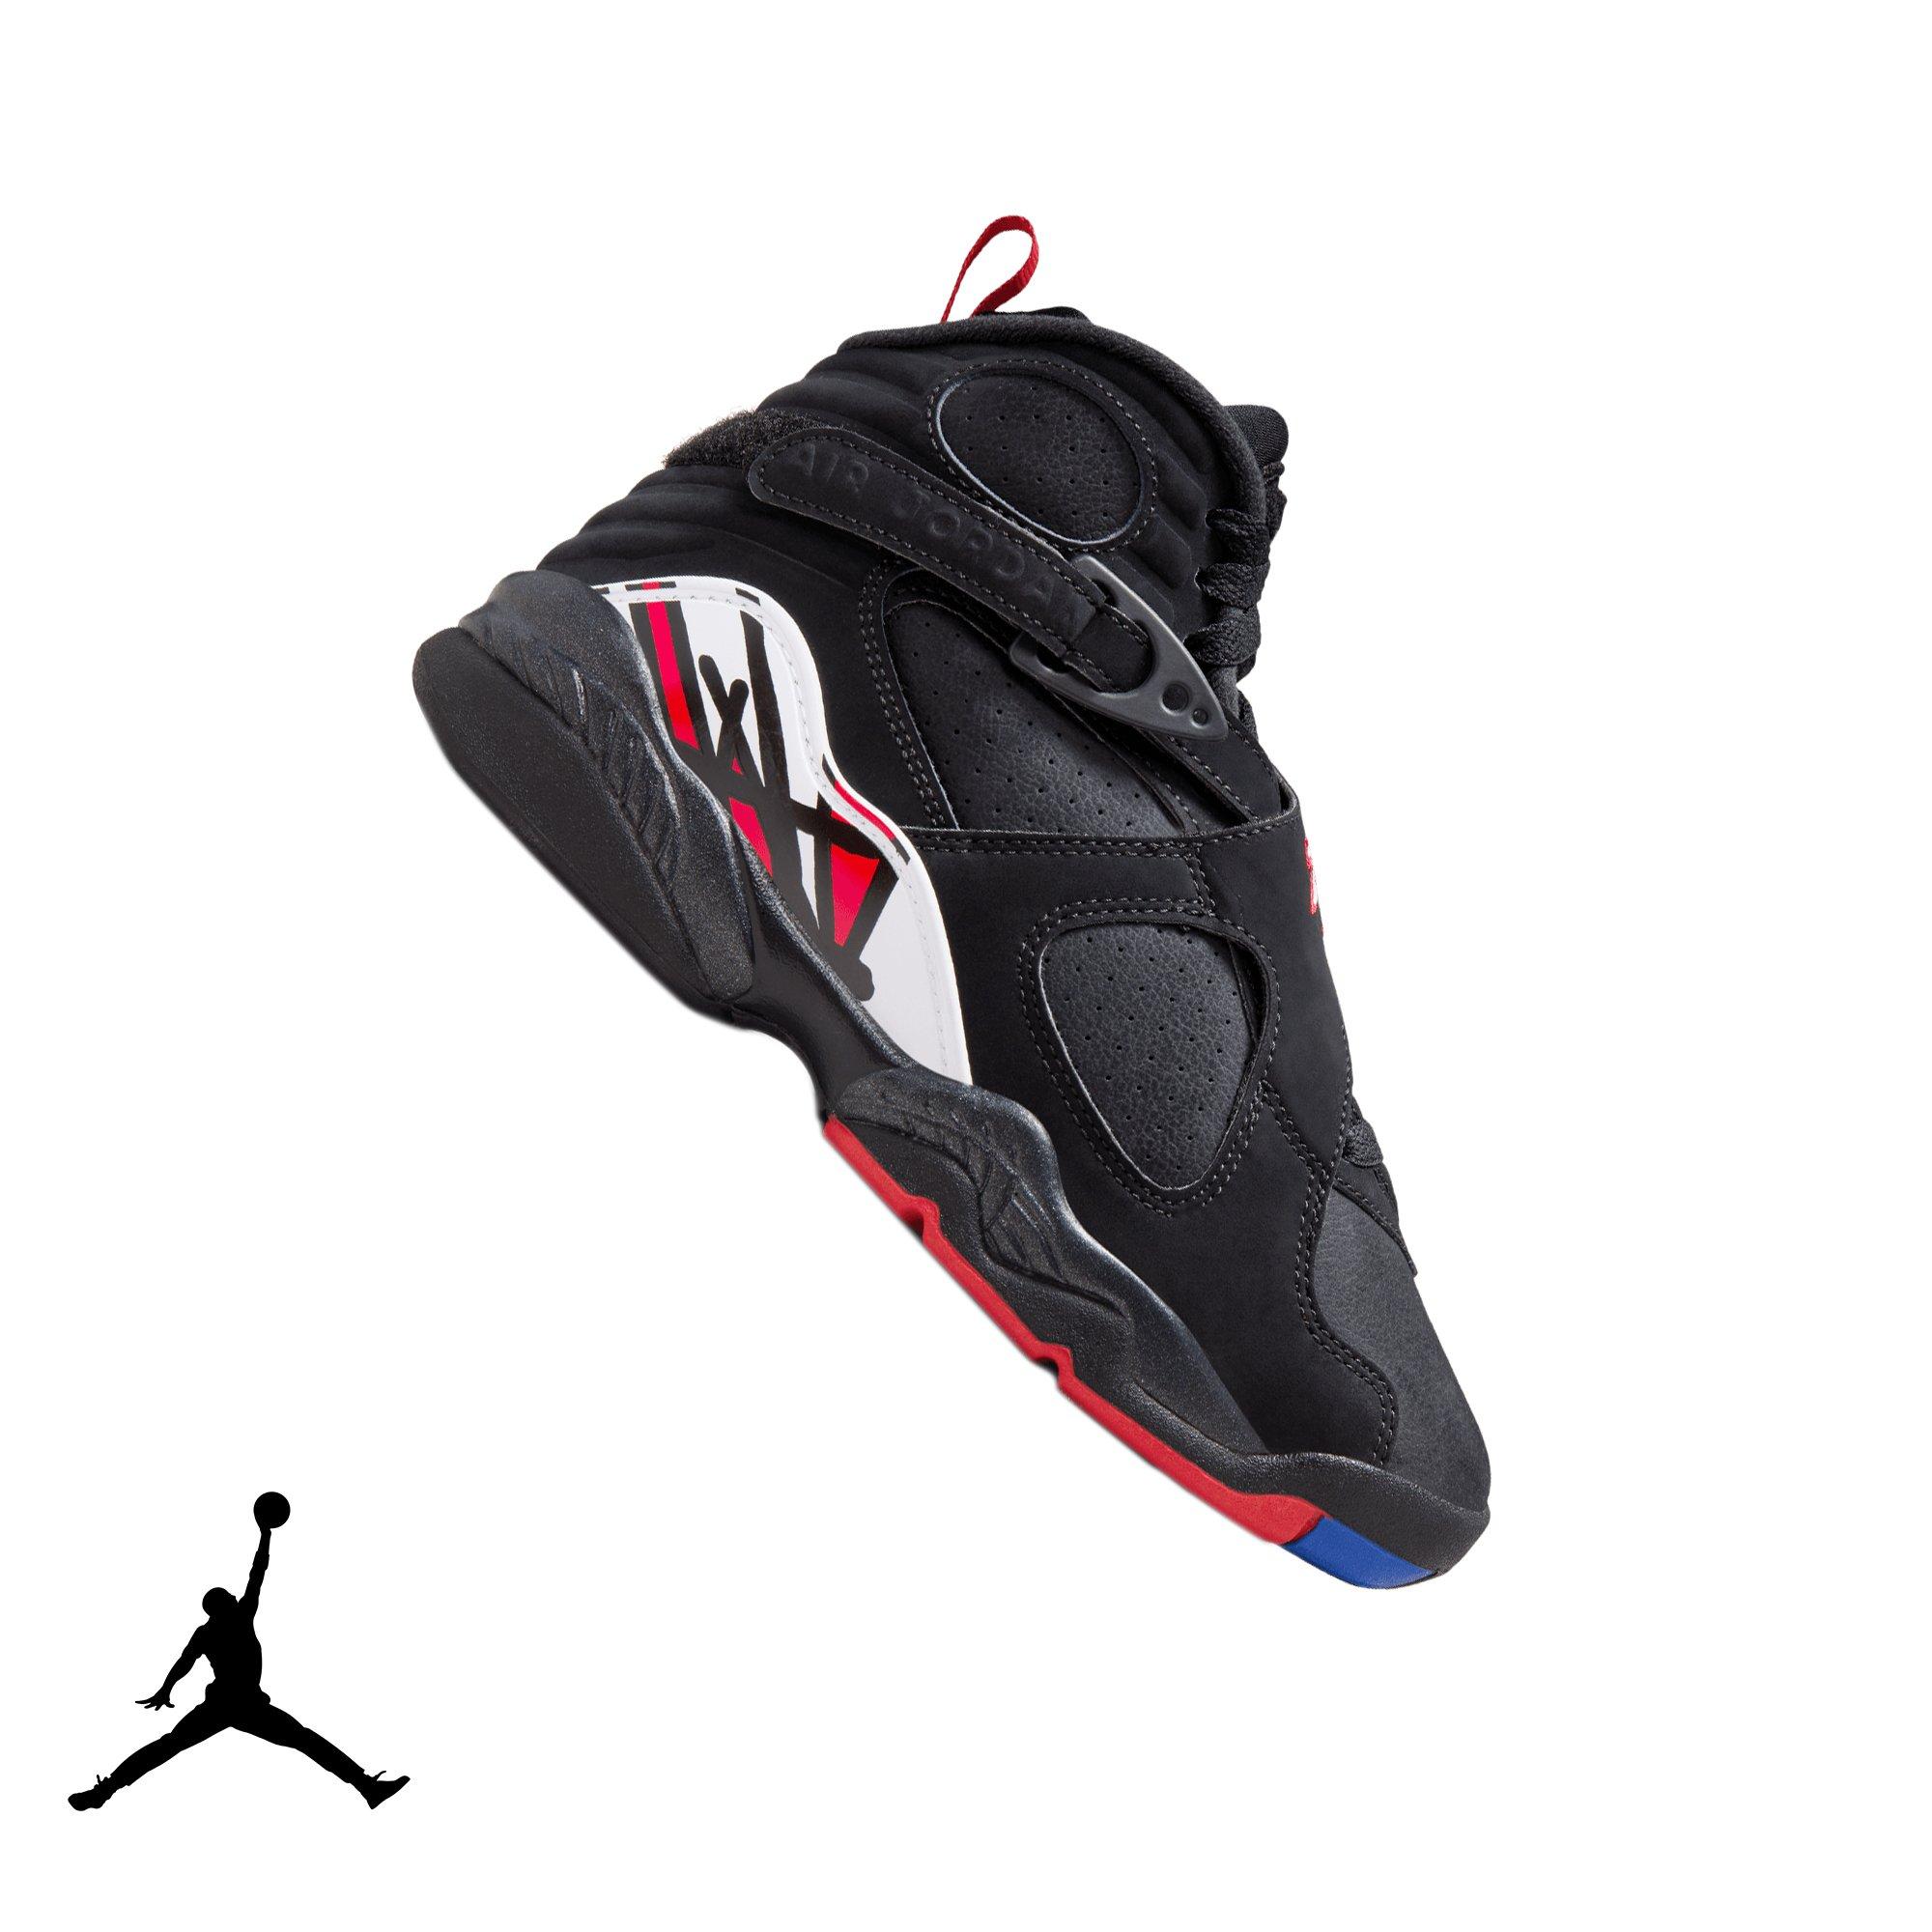 Brand New Jordan Playoff 8s. Size 12. $280. Vintage Micheal Jordan